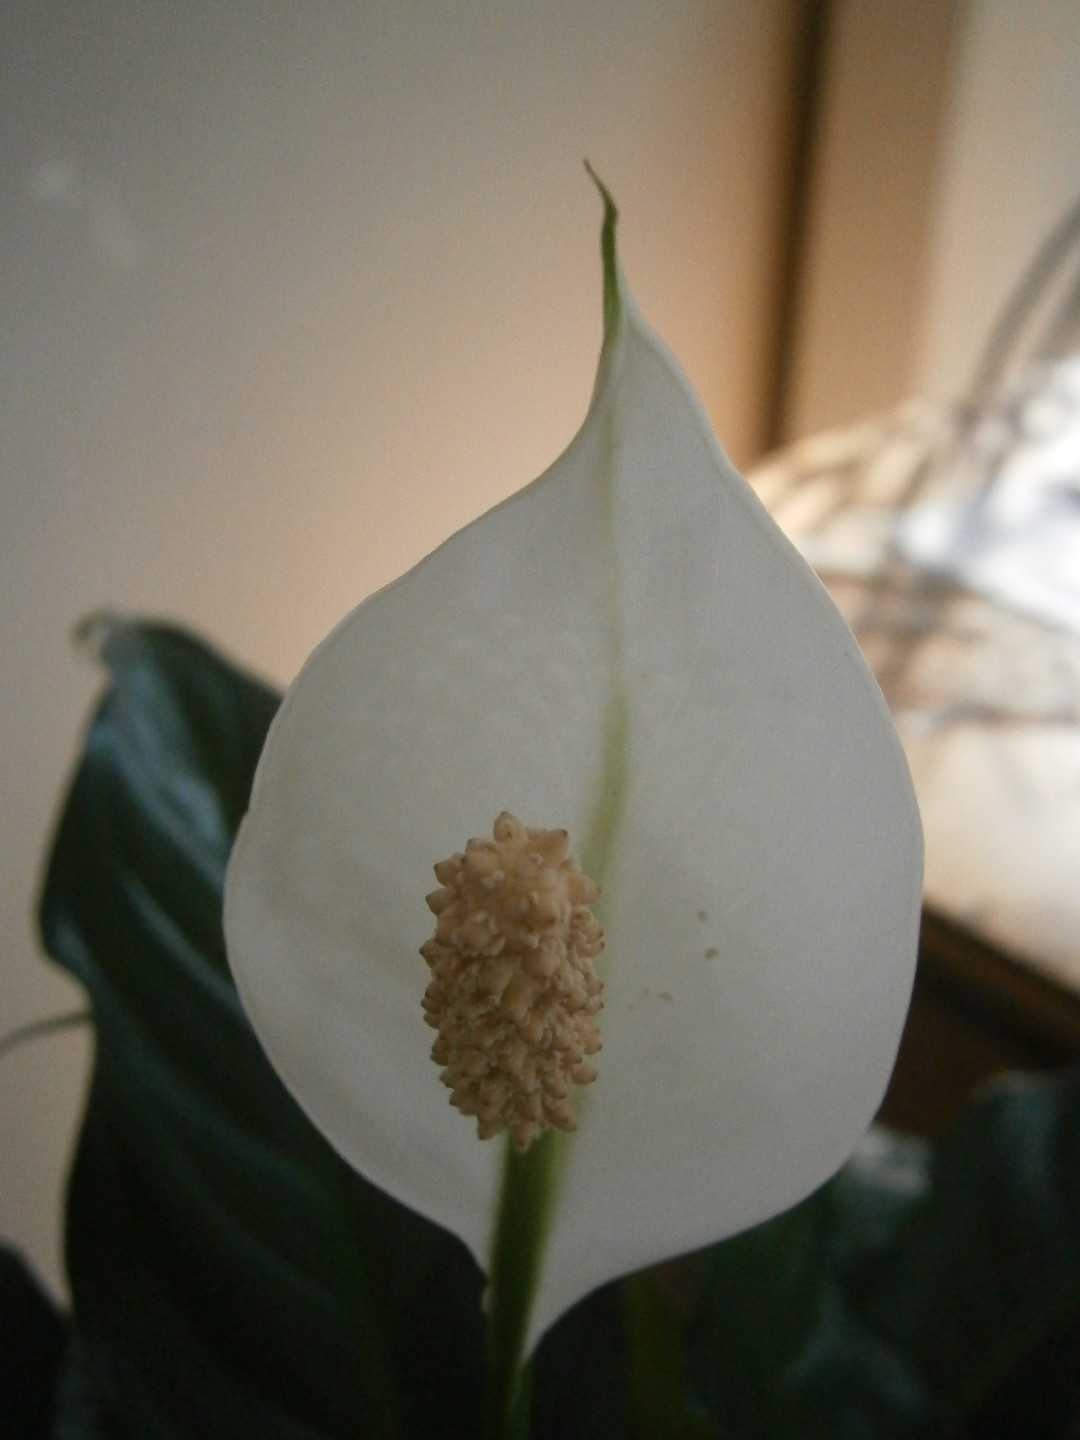 Lirio de la paz (Spathiphyllum cochlearispathum) - PictureThis